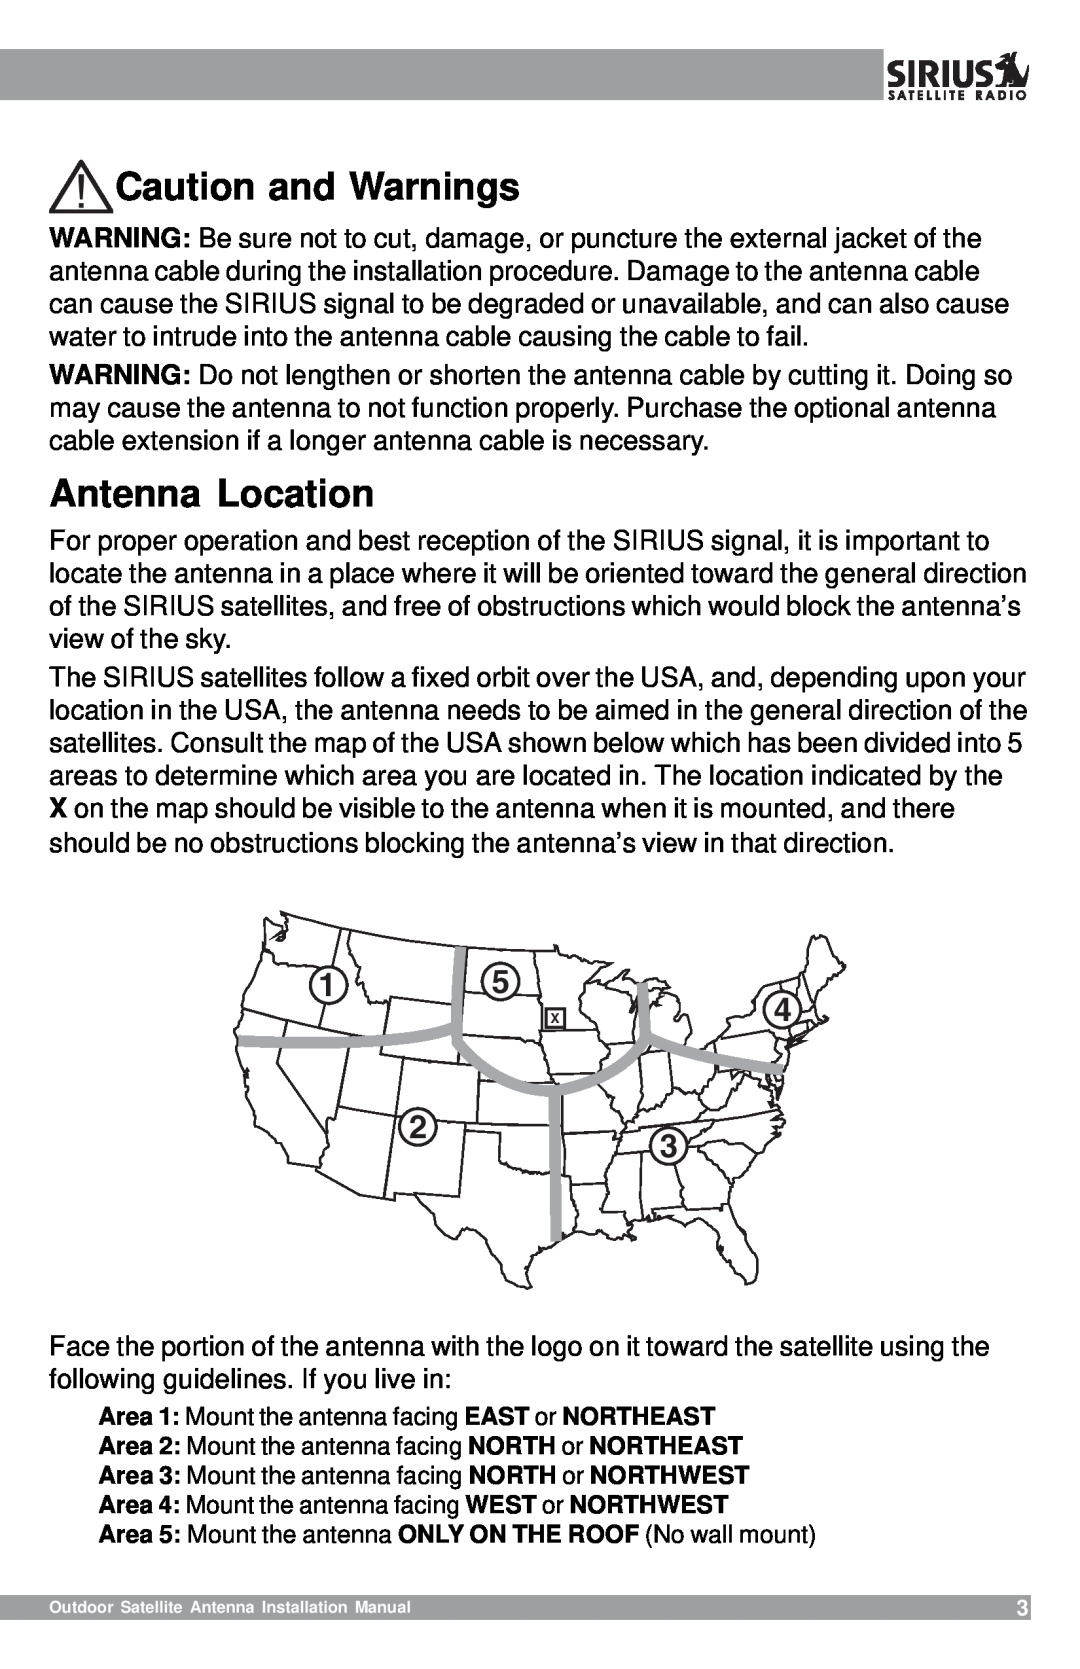 Sirius Satellite Radio 128-8662, SHA1 installation manual Caution and Warnings, Antenna Location 